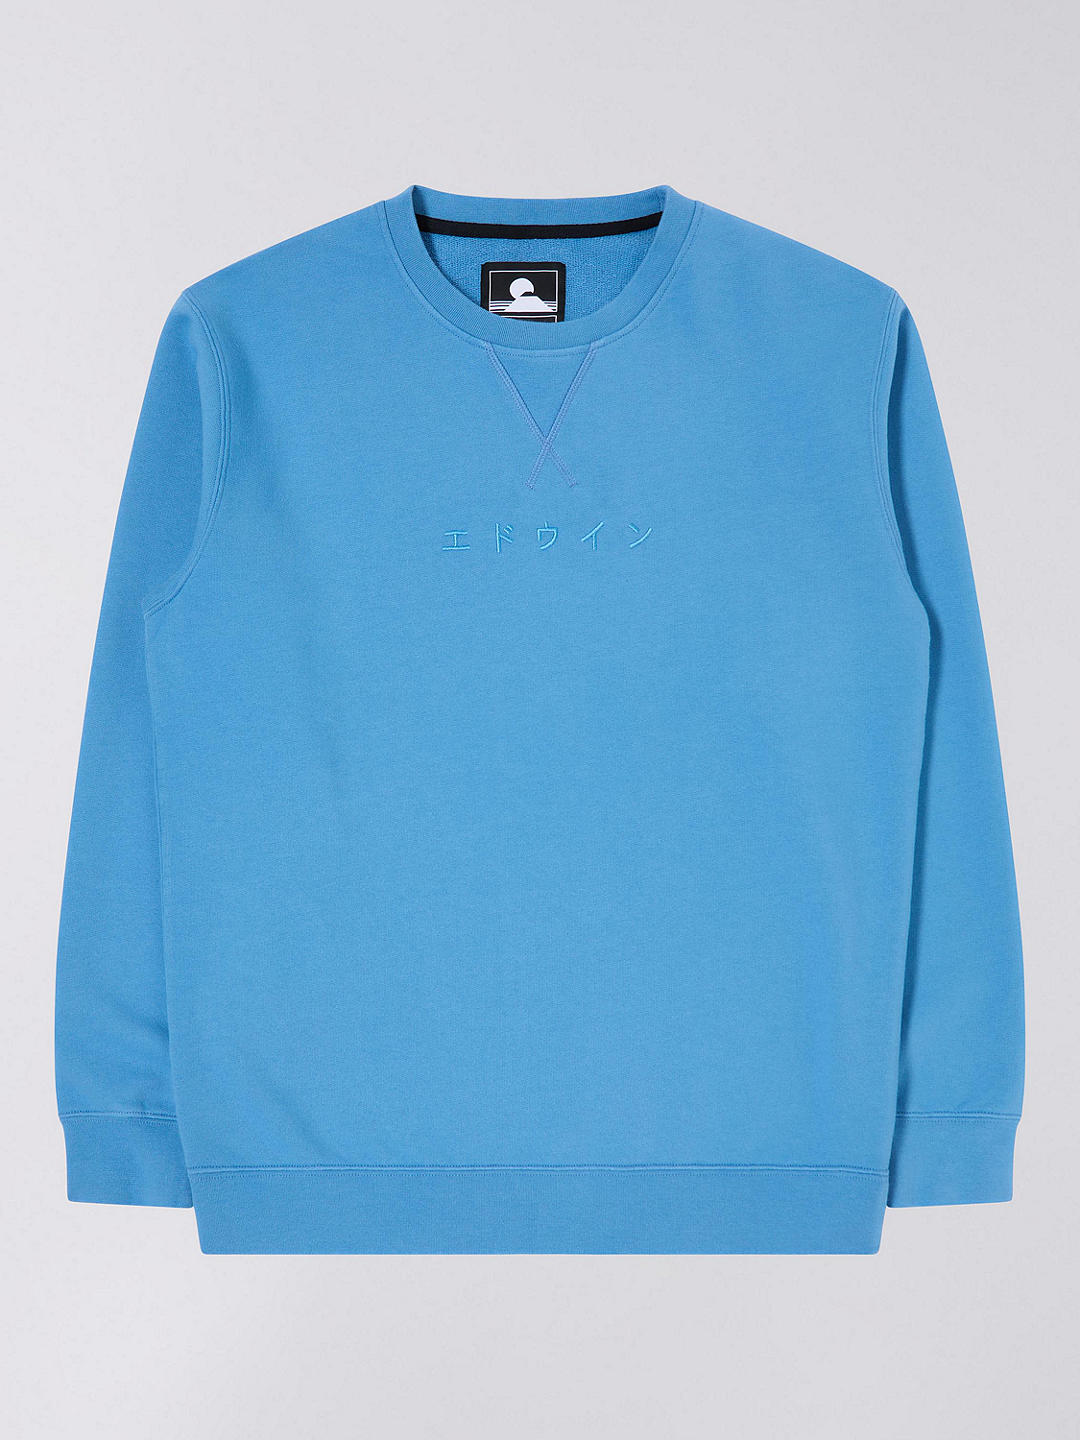 Edwin Katakana Cotton Sweatshirt, Parisian Blue at John Lewis & Partners